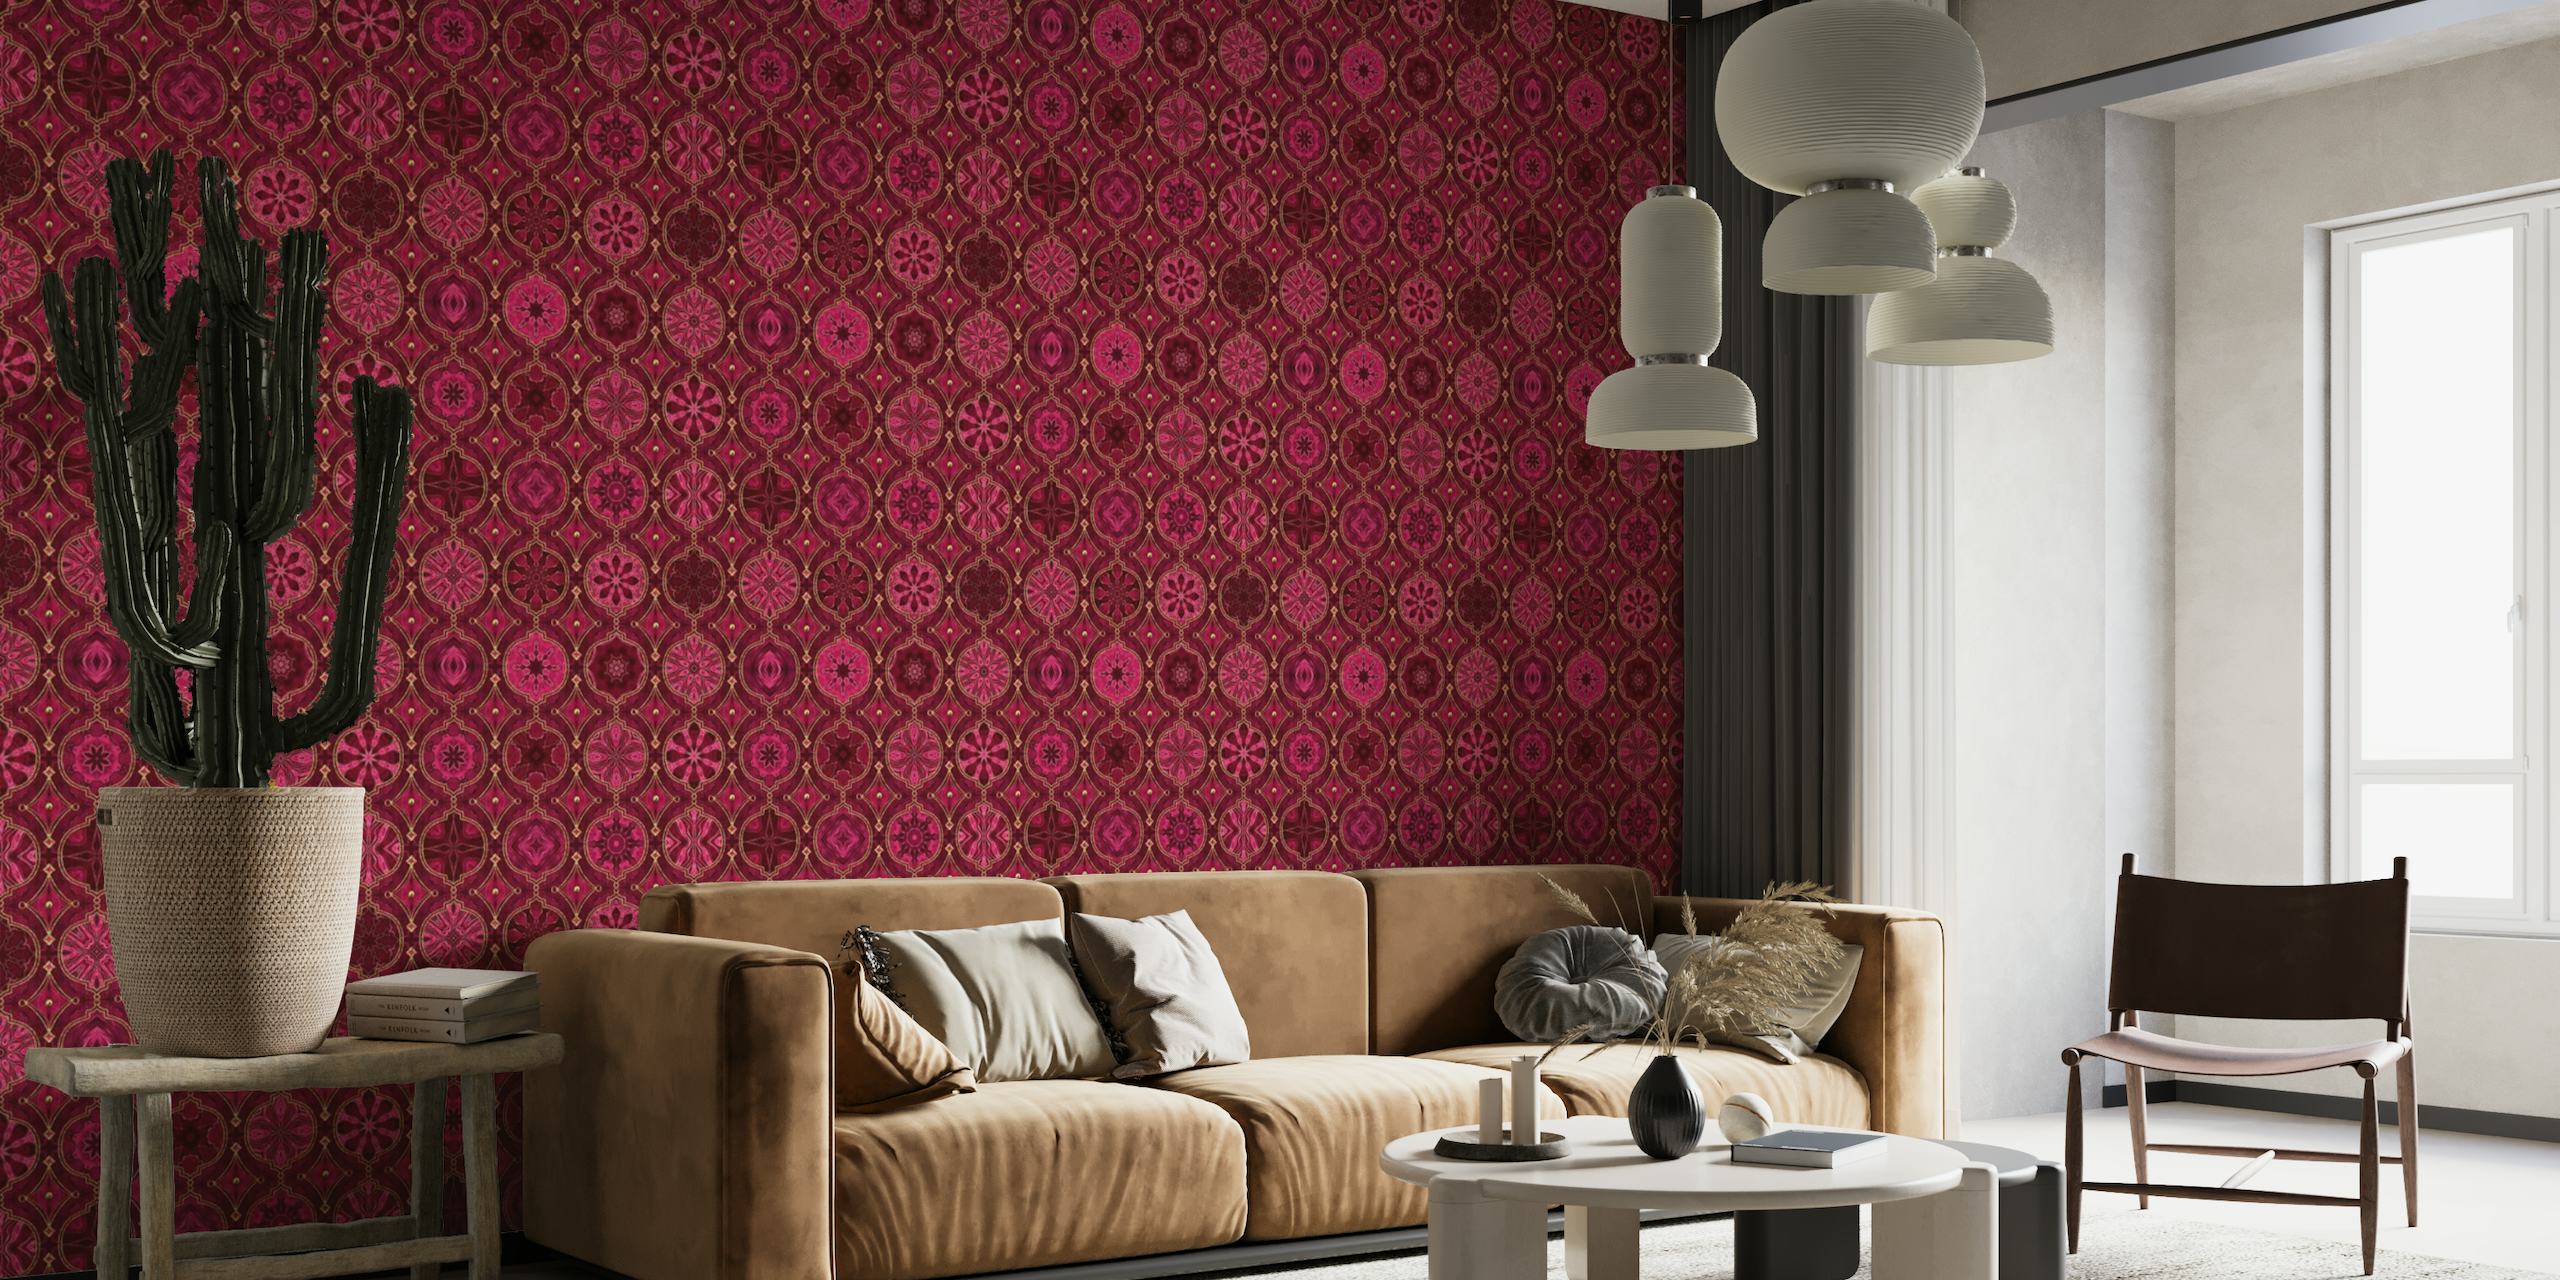 Treasures of Morocco Oriental Tile Design Burgundy Pink Gold papiers peint